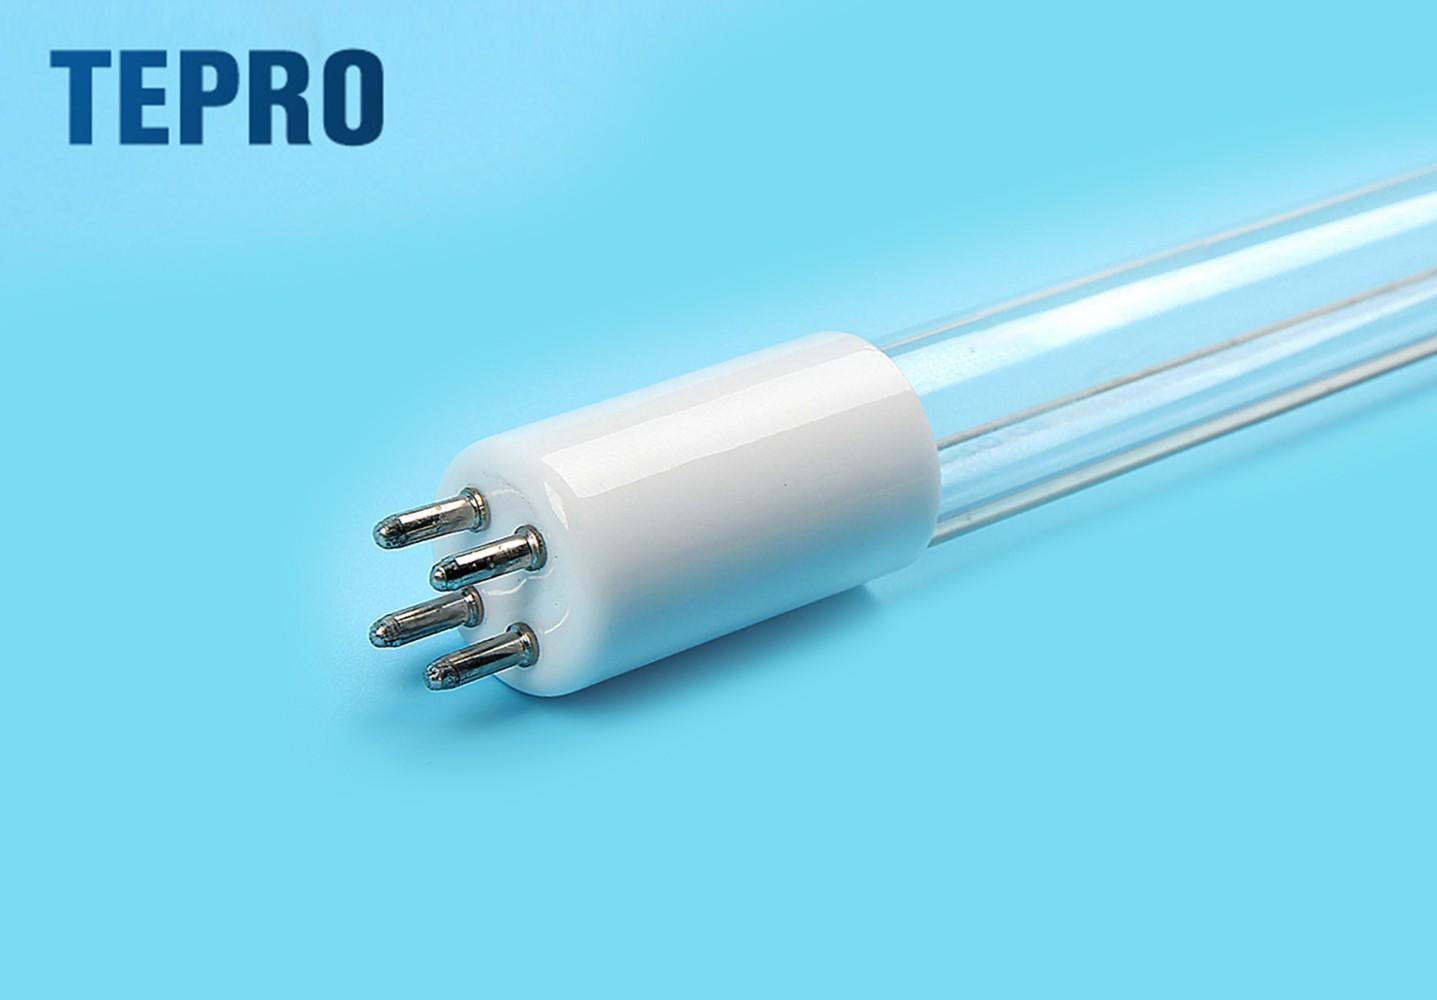 Tepro uv light flashlight brand for pools-1